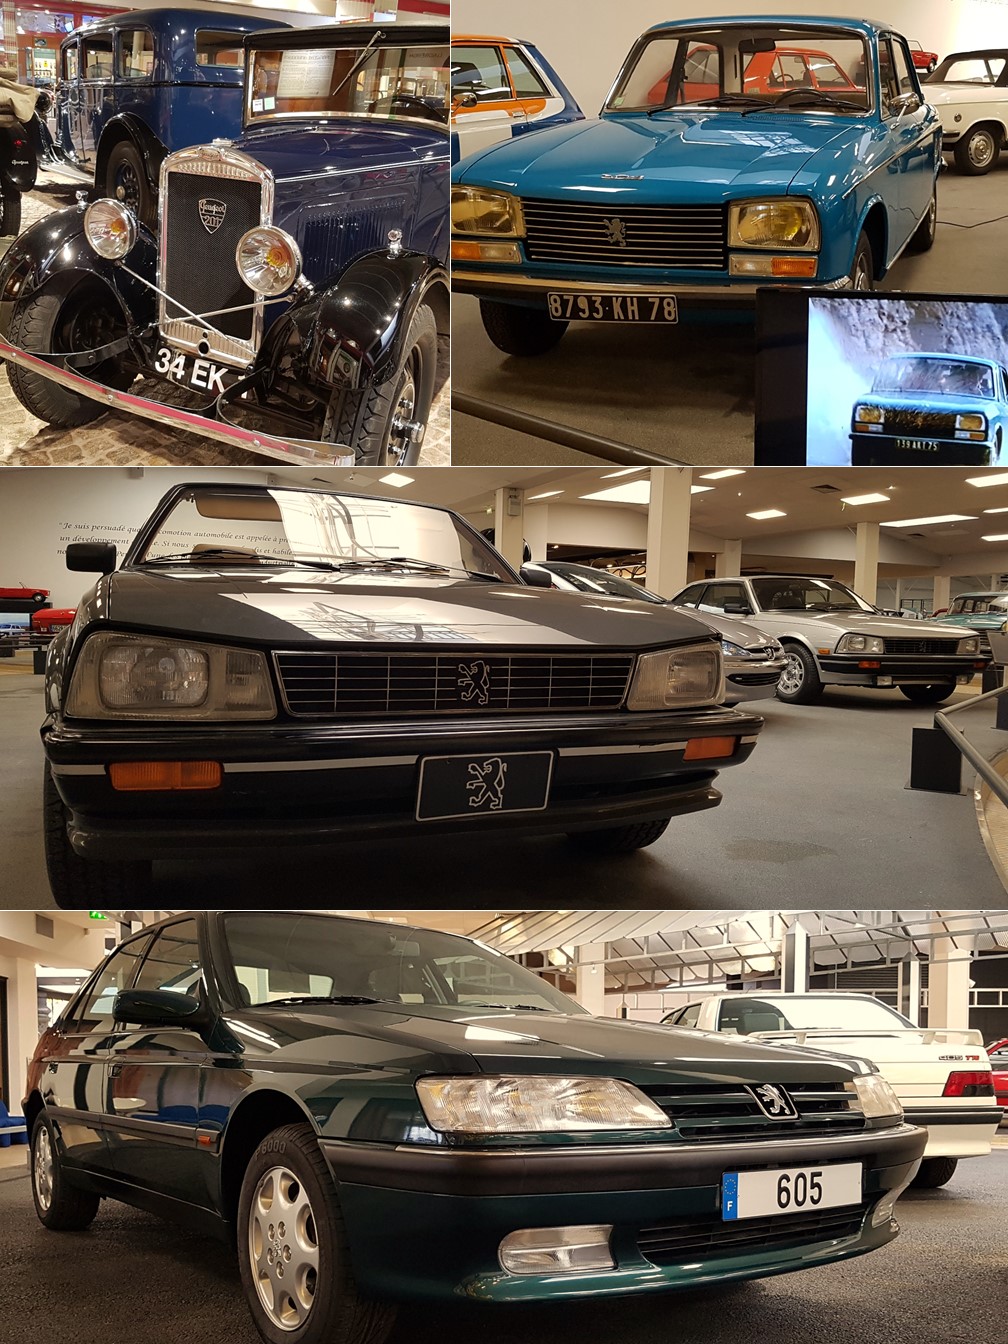 Je visite une superbe collection privée Peugeot ! 